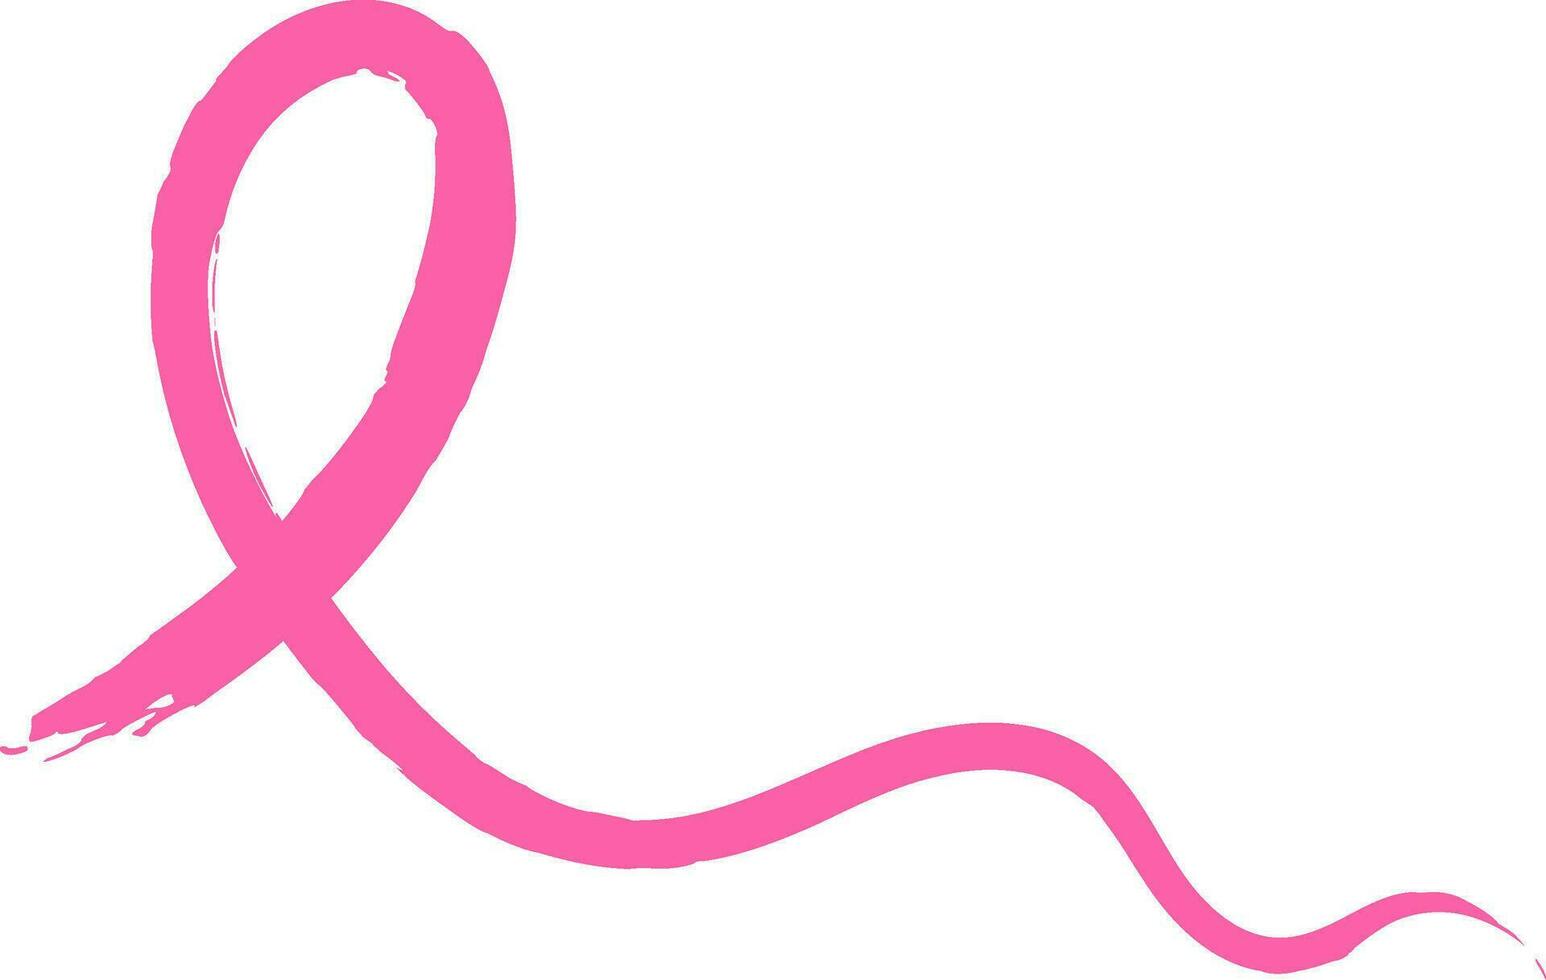 cáncer cinta, rosado cinta, conciencia cinta, superviviente cinta, cáncer silueta, clipart, cáncer cortar archivo, pecho cáncer, esperanza, rosa, fuerte mujer, cáncer vector